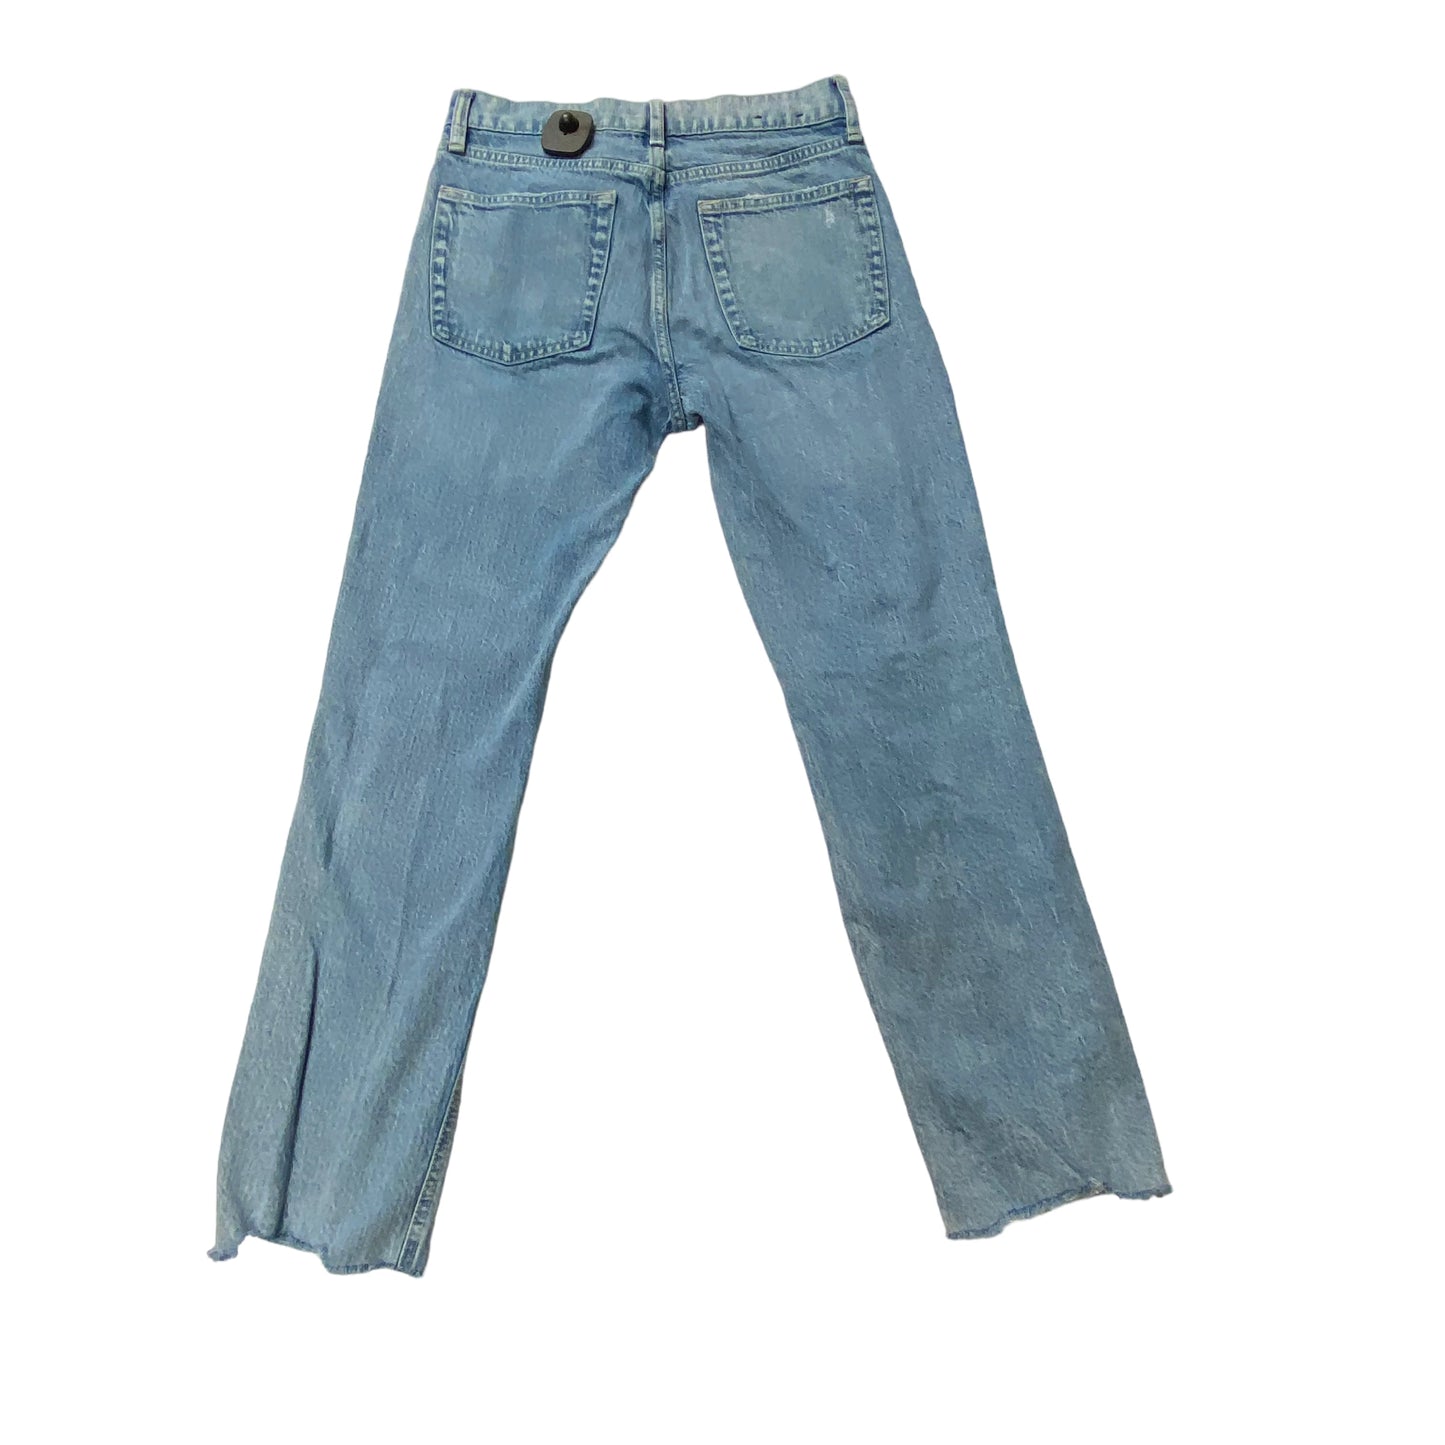 Blue Jeans Straight Gap, Size 2